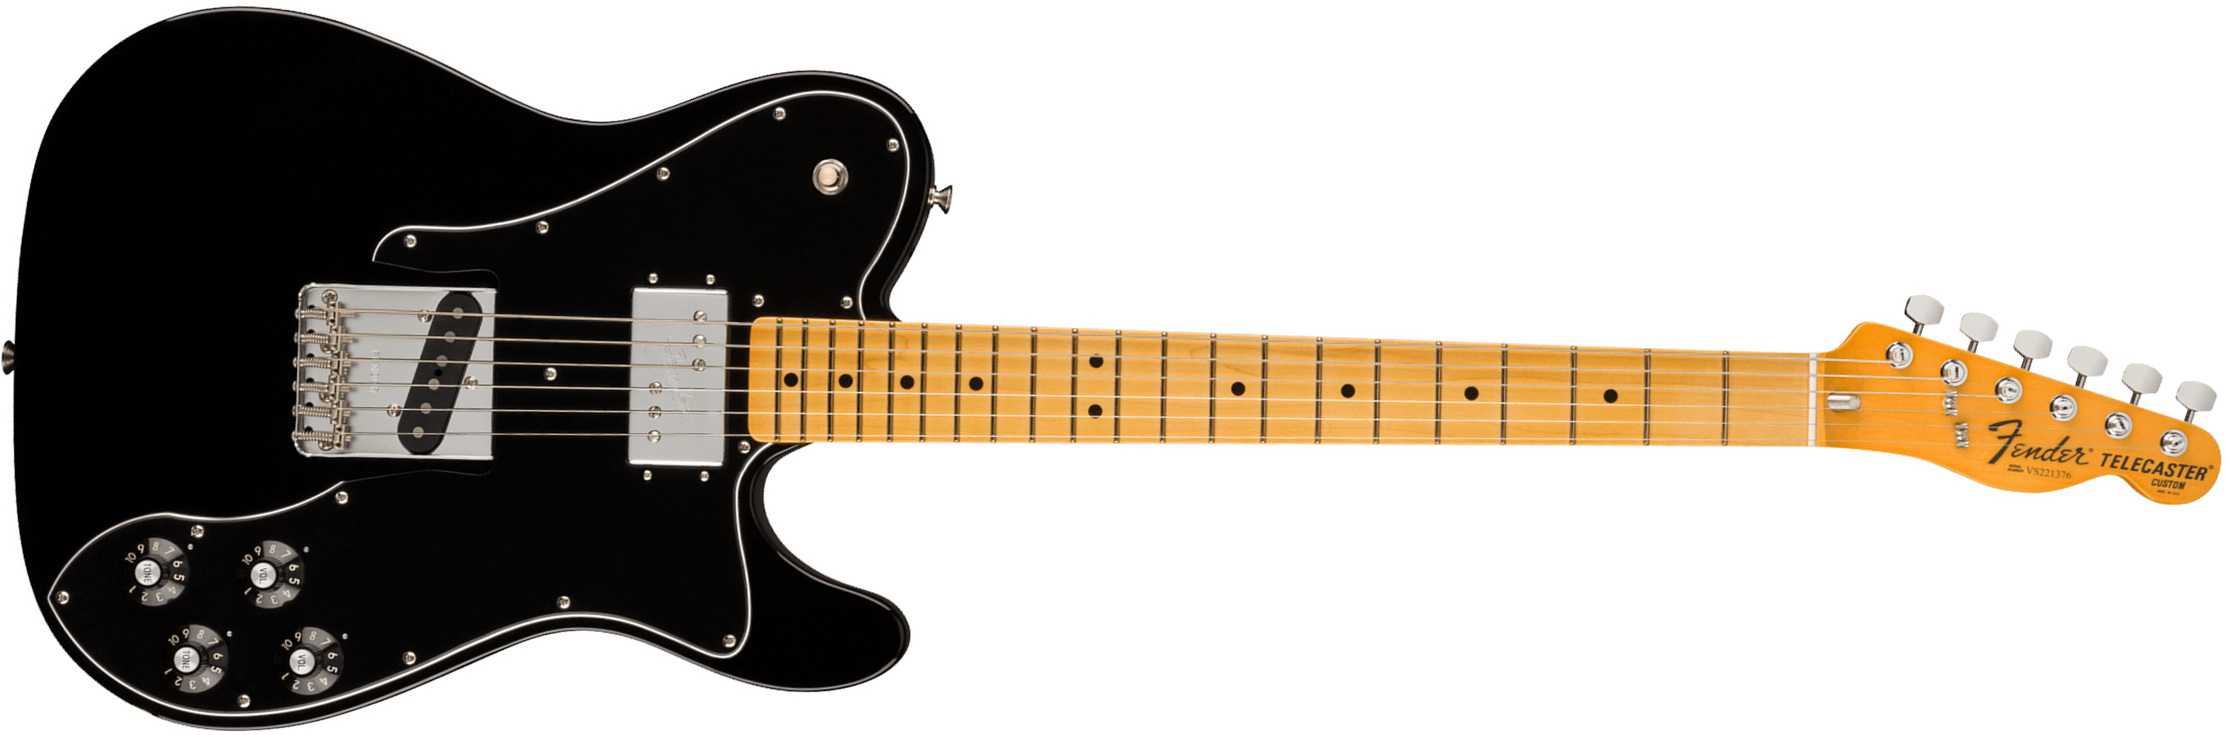 Fender Tele Custom 1977 American Vintage Ii Usa Sh Ht Mn - Black - Tel shape electric guitar - Main picture